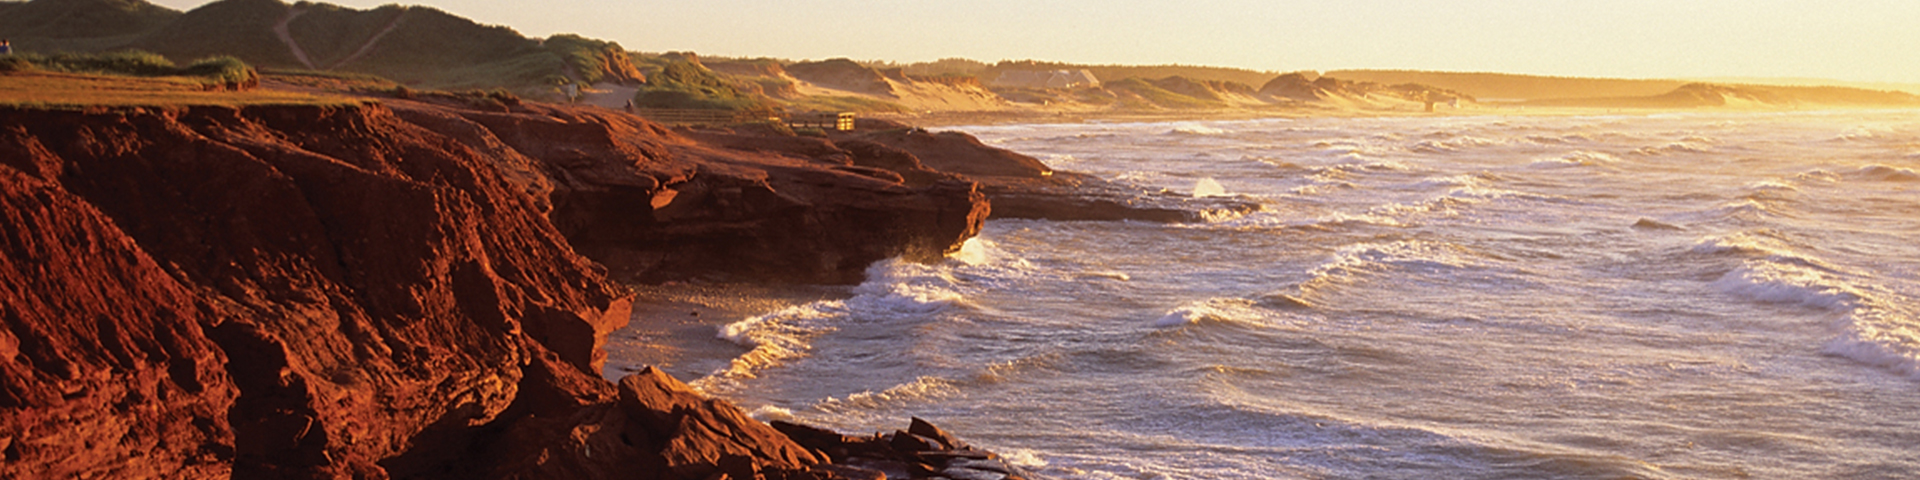 Cliffs along the ocean at Oceanview - PEI National Park